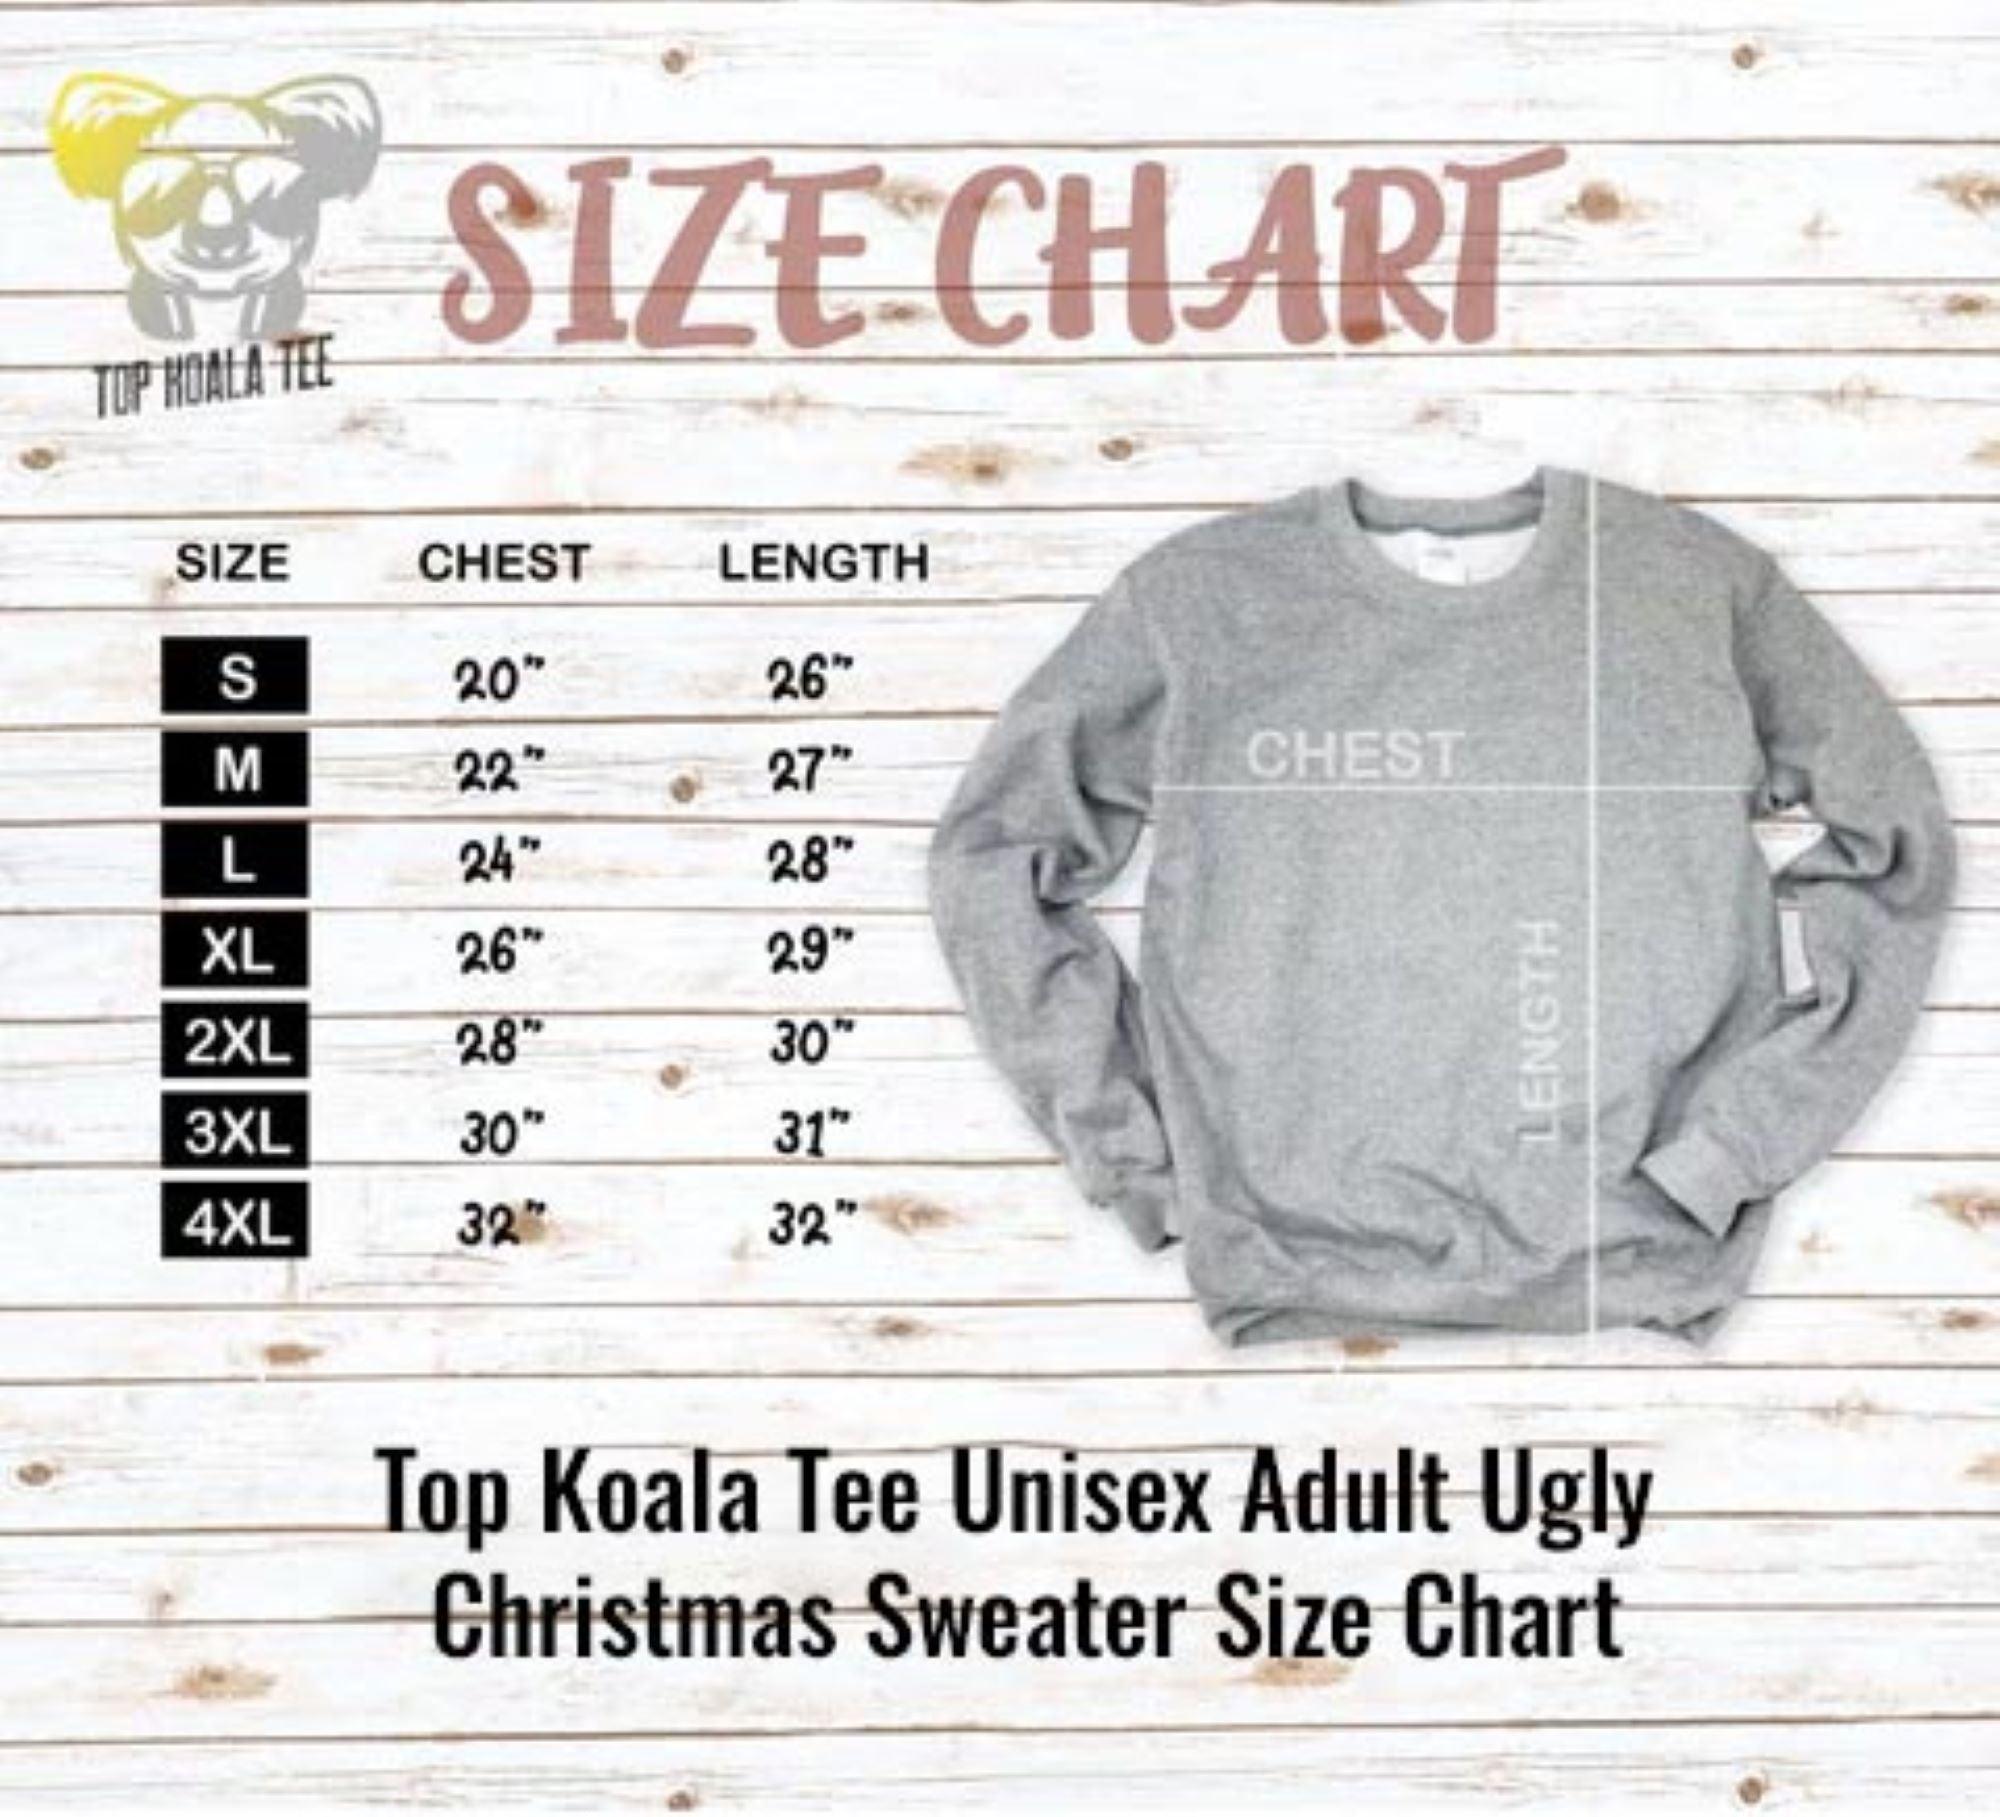 Have A Merry Swift-Mas Ugly Christmas Sweater Top Koala Tee - TopKoalaTee